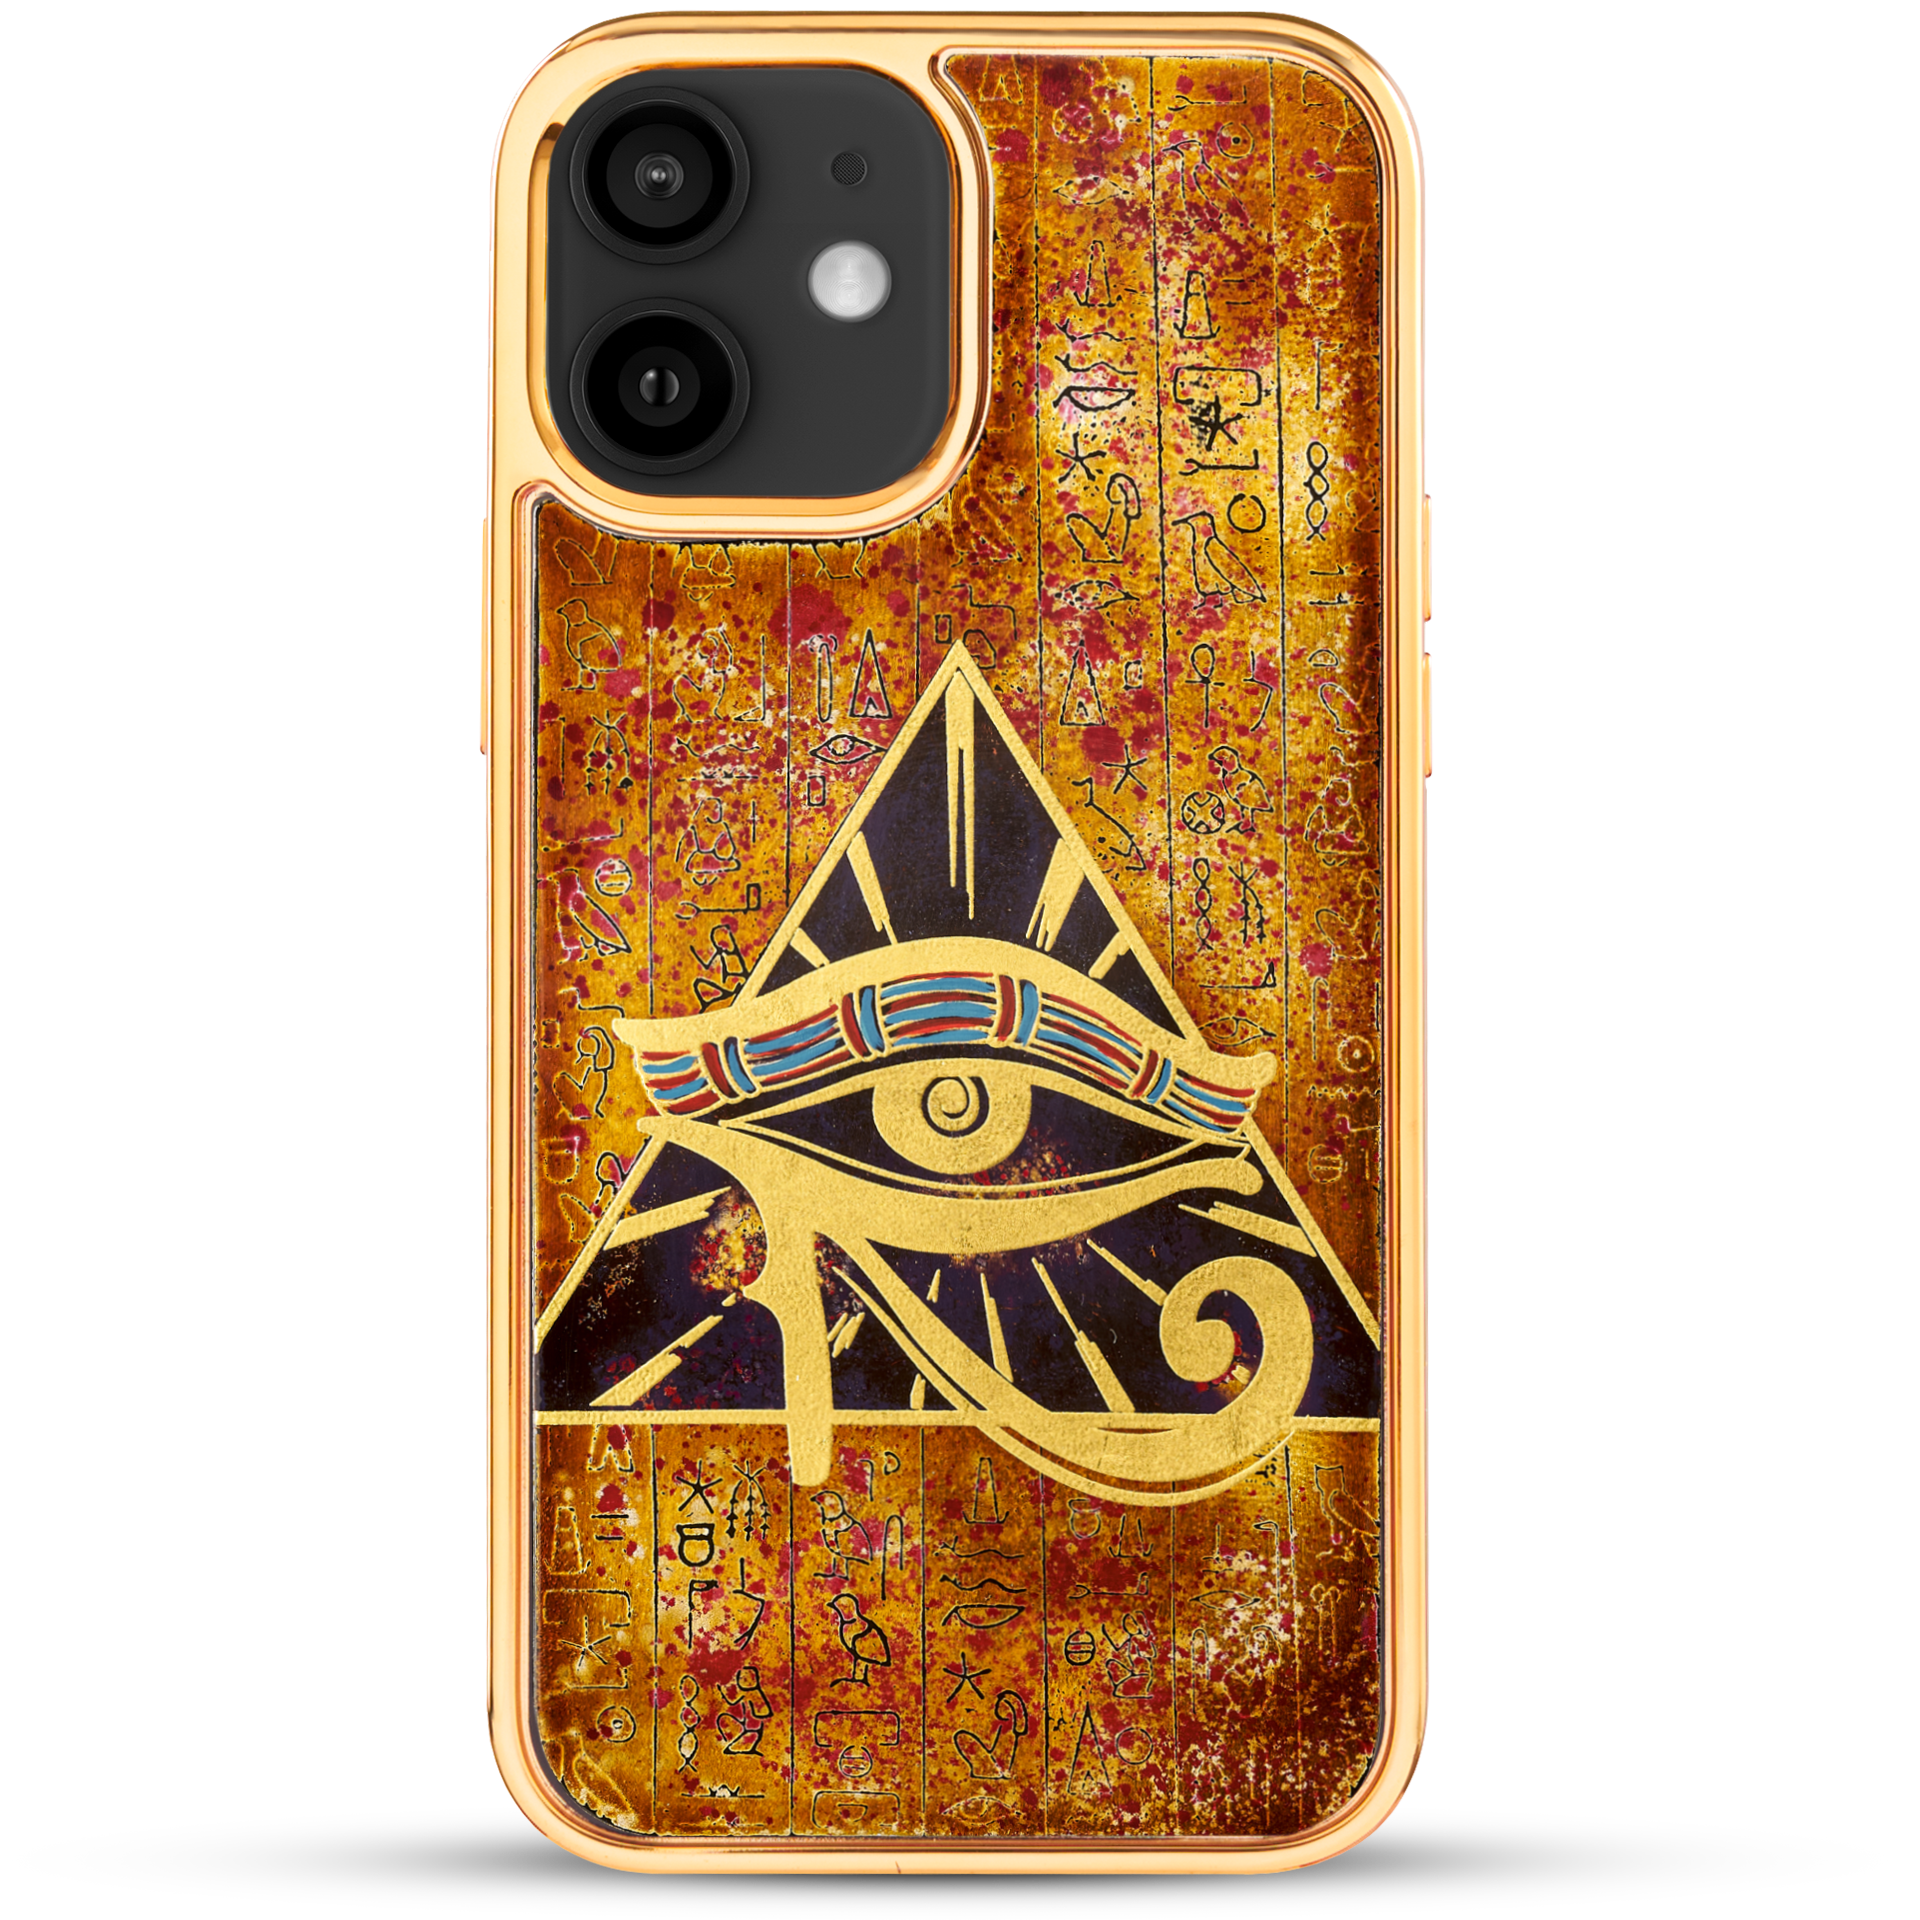 Horus eye - iPhone 11 Series